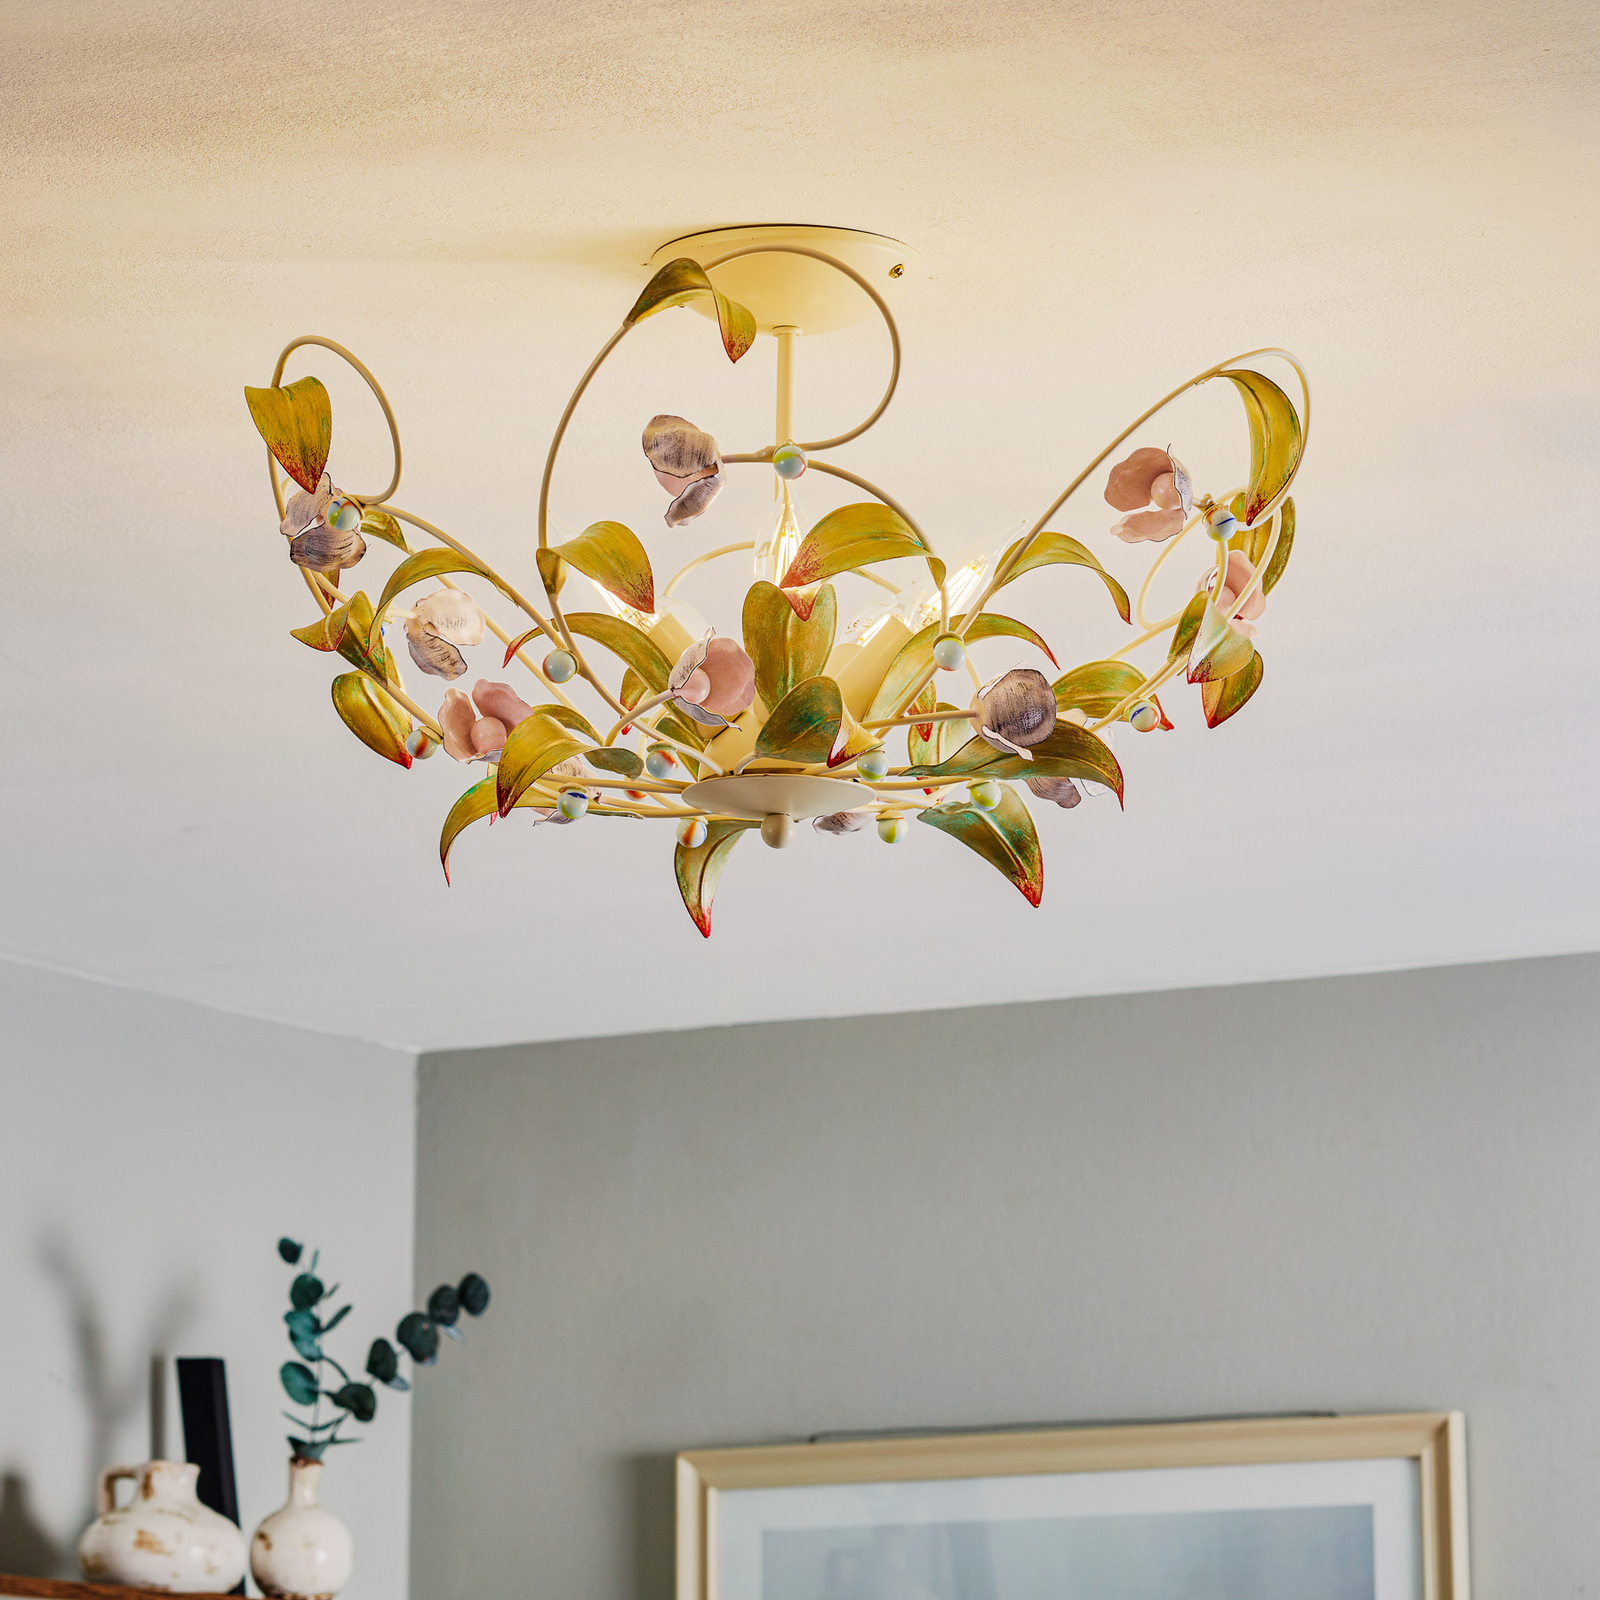 Rose ceiling light as a chandelier, 5-bulb